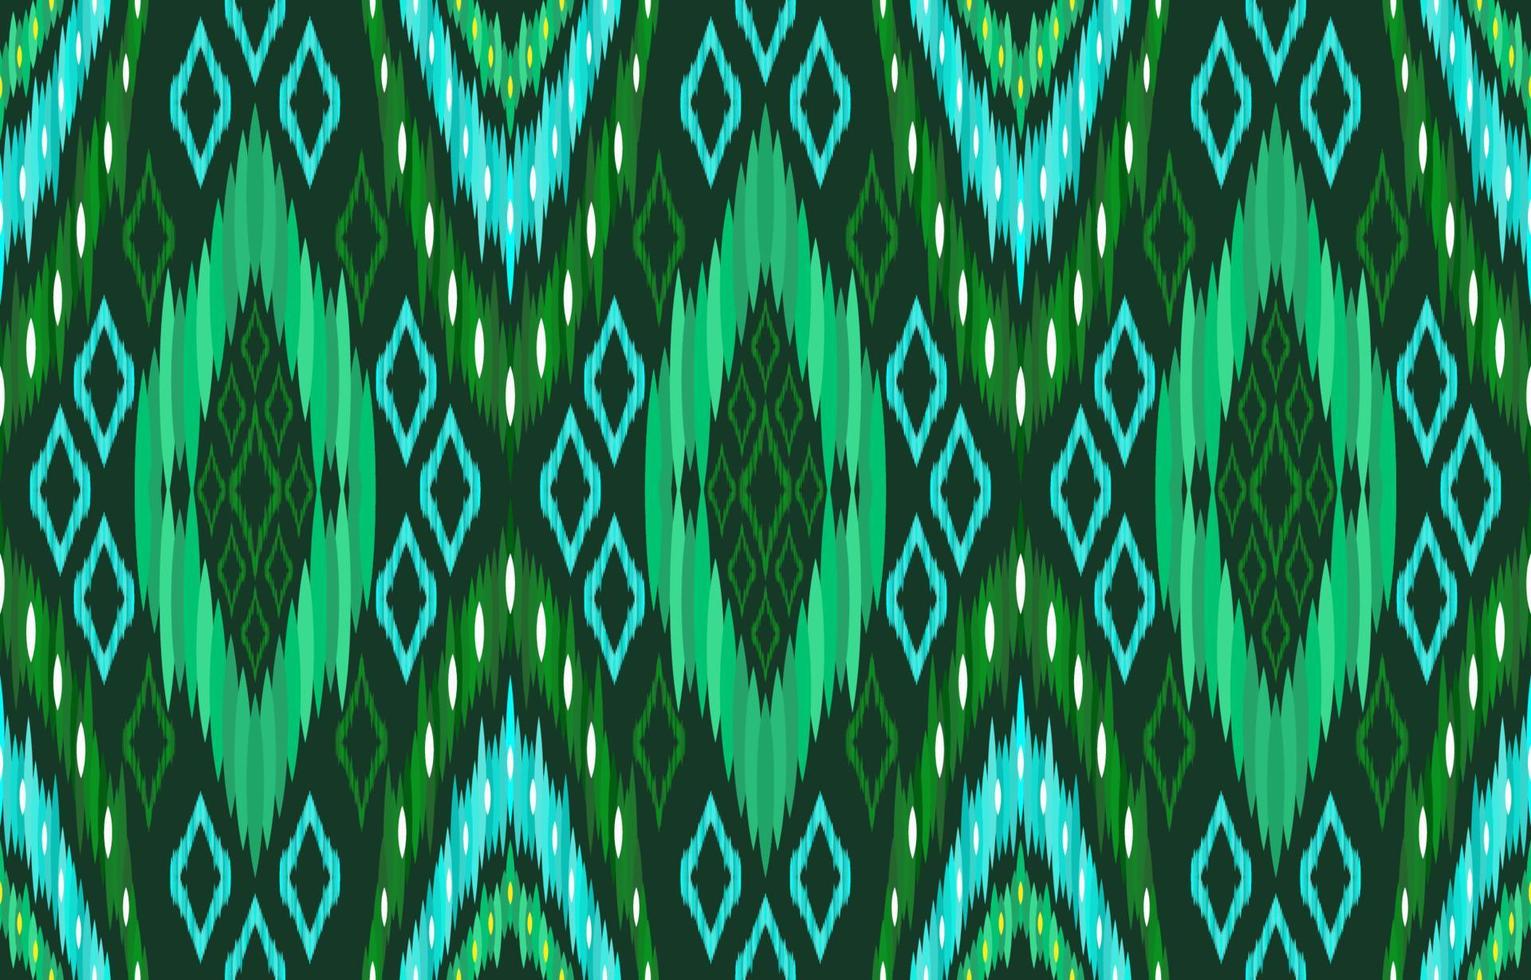 Green ikat patterns. Geometric tribal vintage retro style. Ethnic fabric ikat seamless pattern. Indian navajo aztec ikat print vector illustration. Design for backdrop texture fabric clothing textile.